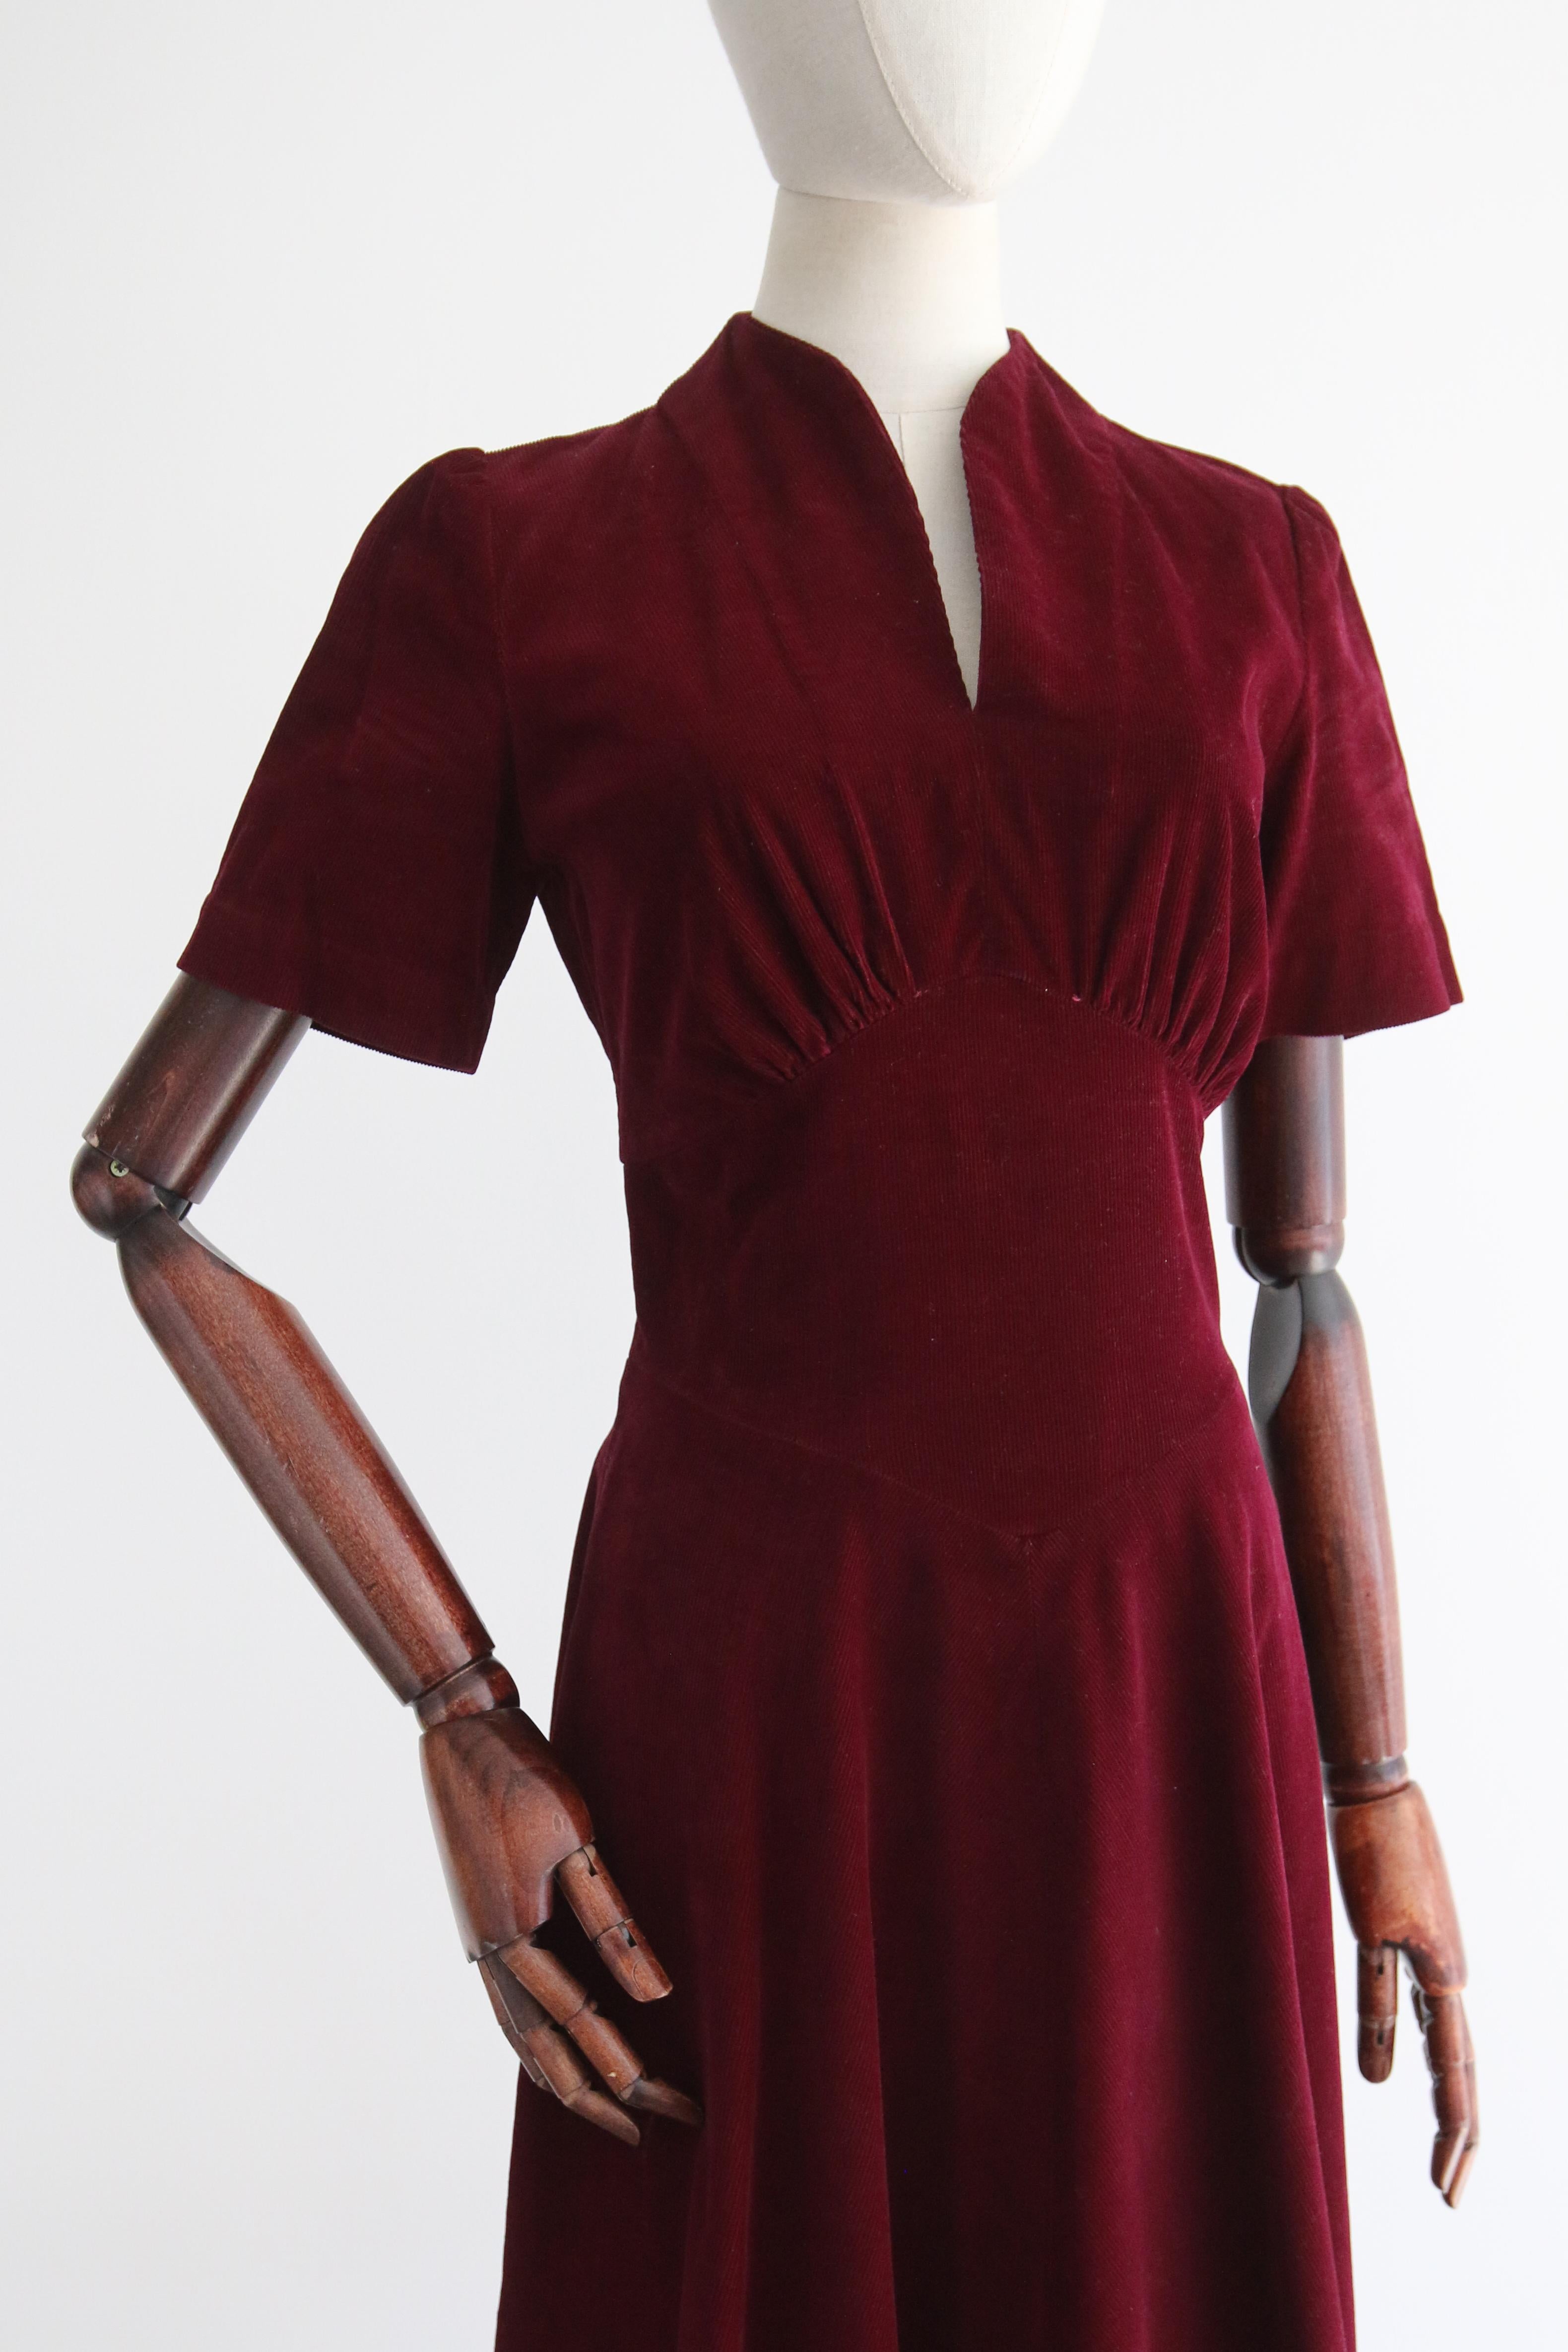 Women's Vintage 1940's Burgundy Corduroy Dress UK 8 US 4 For Sale